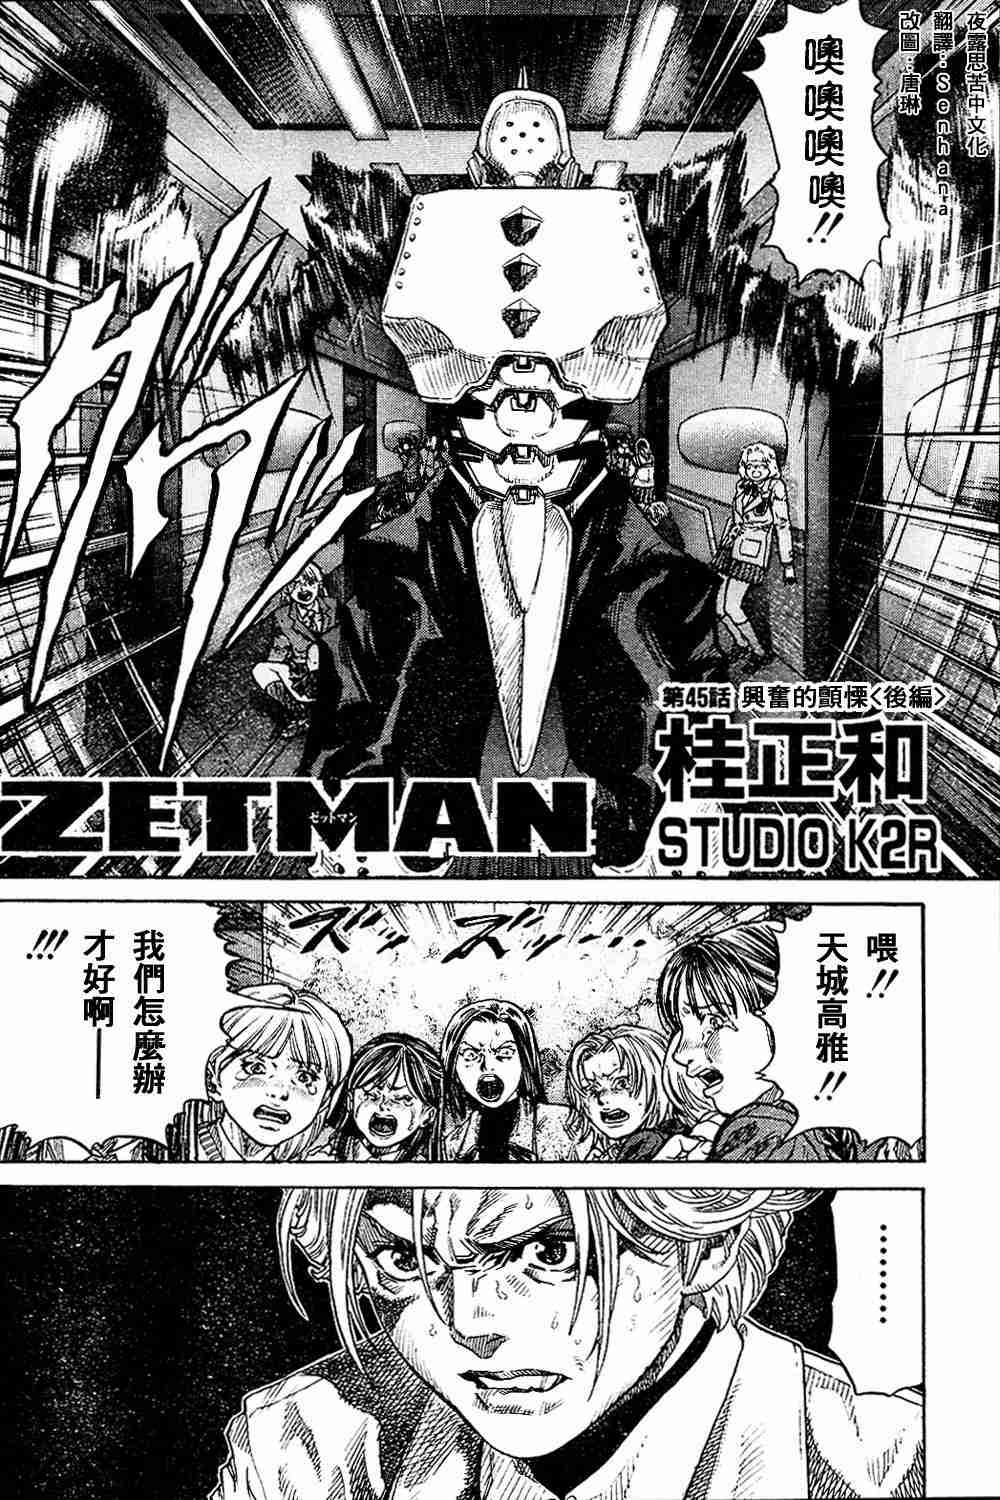 《ZETMAN超魔人》漫画 zetman41-47集